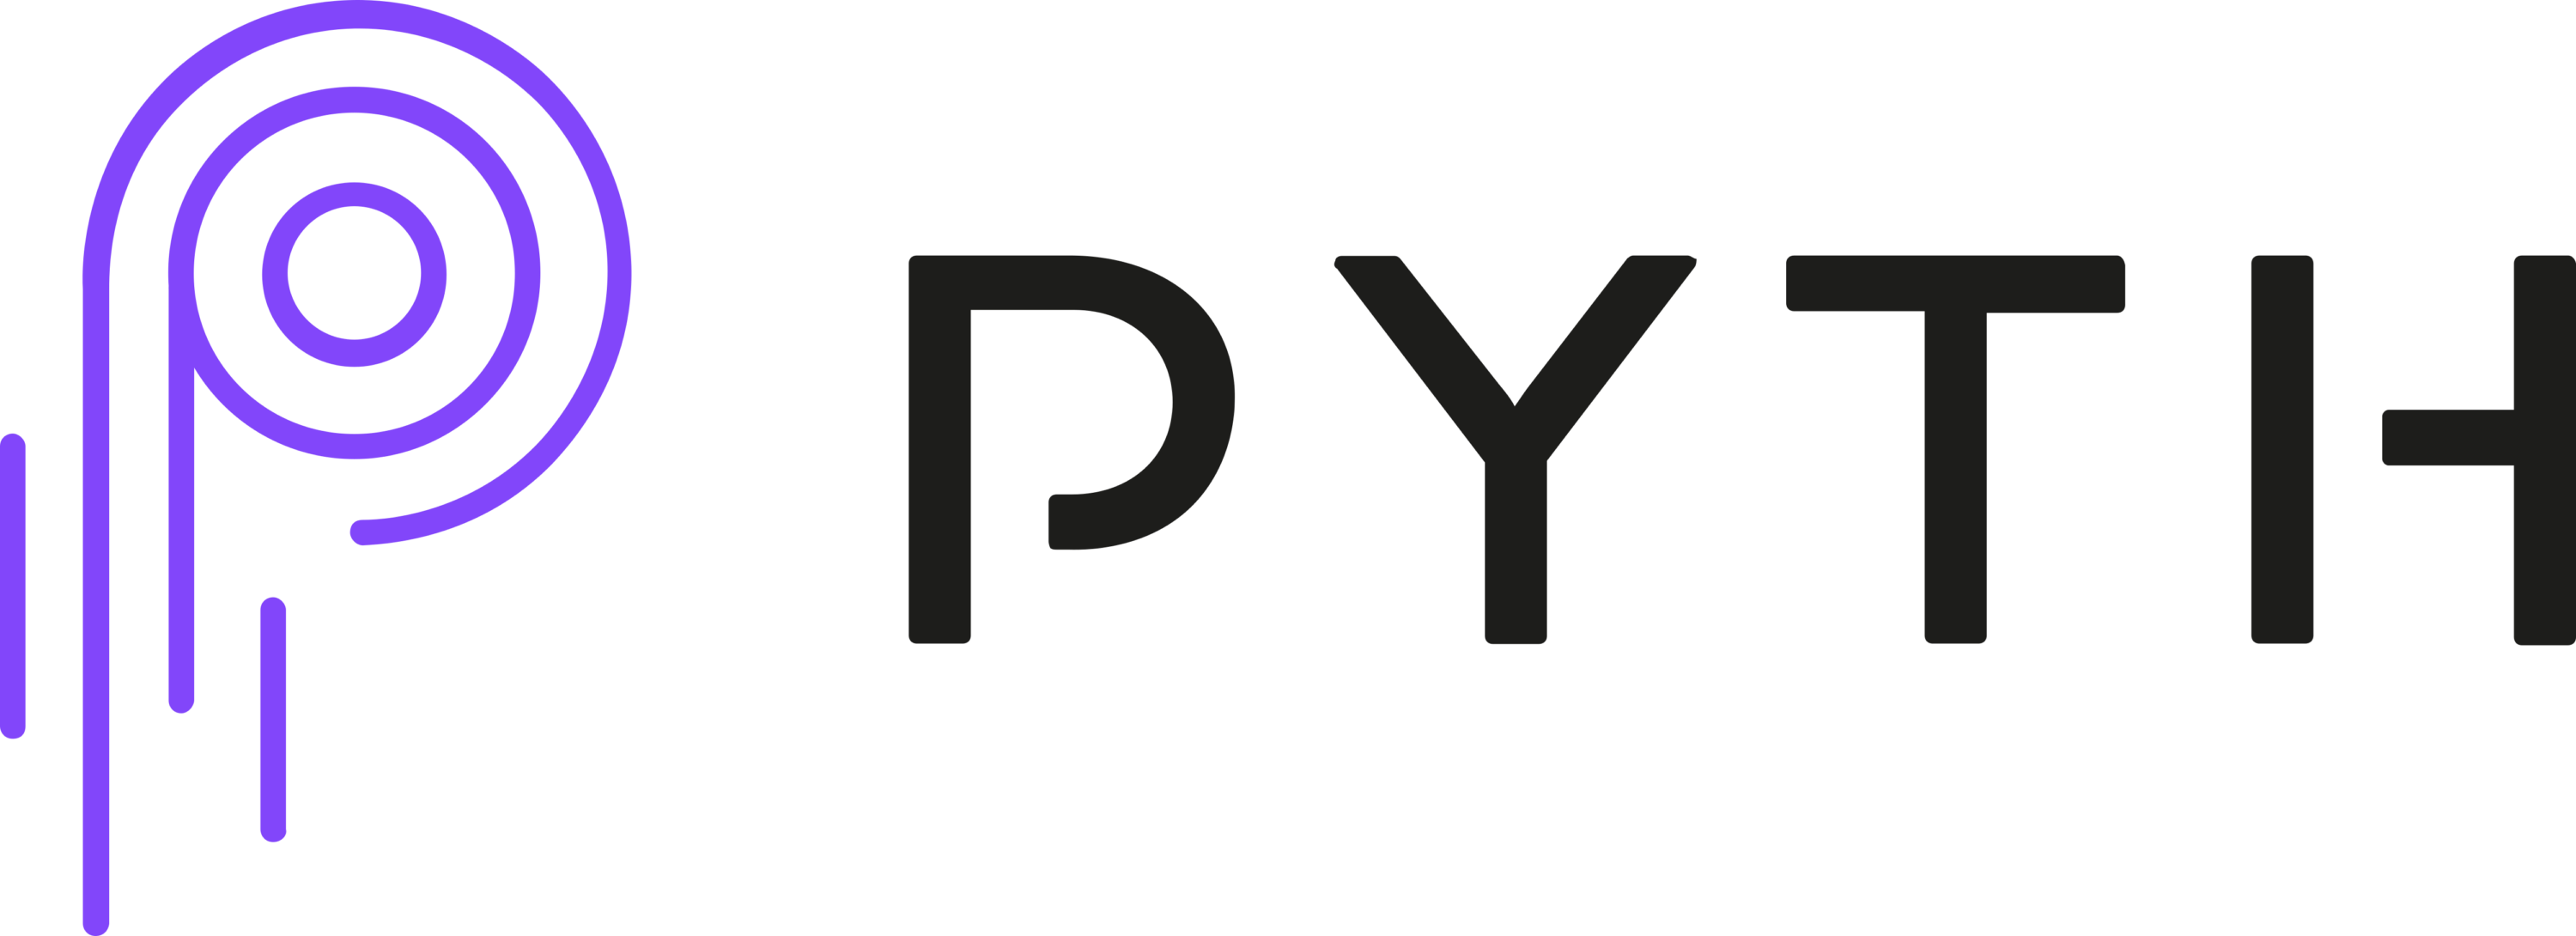 Pyth Network Logo